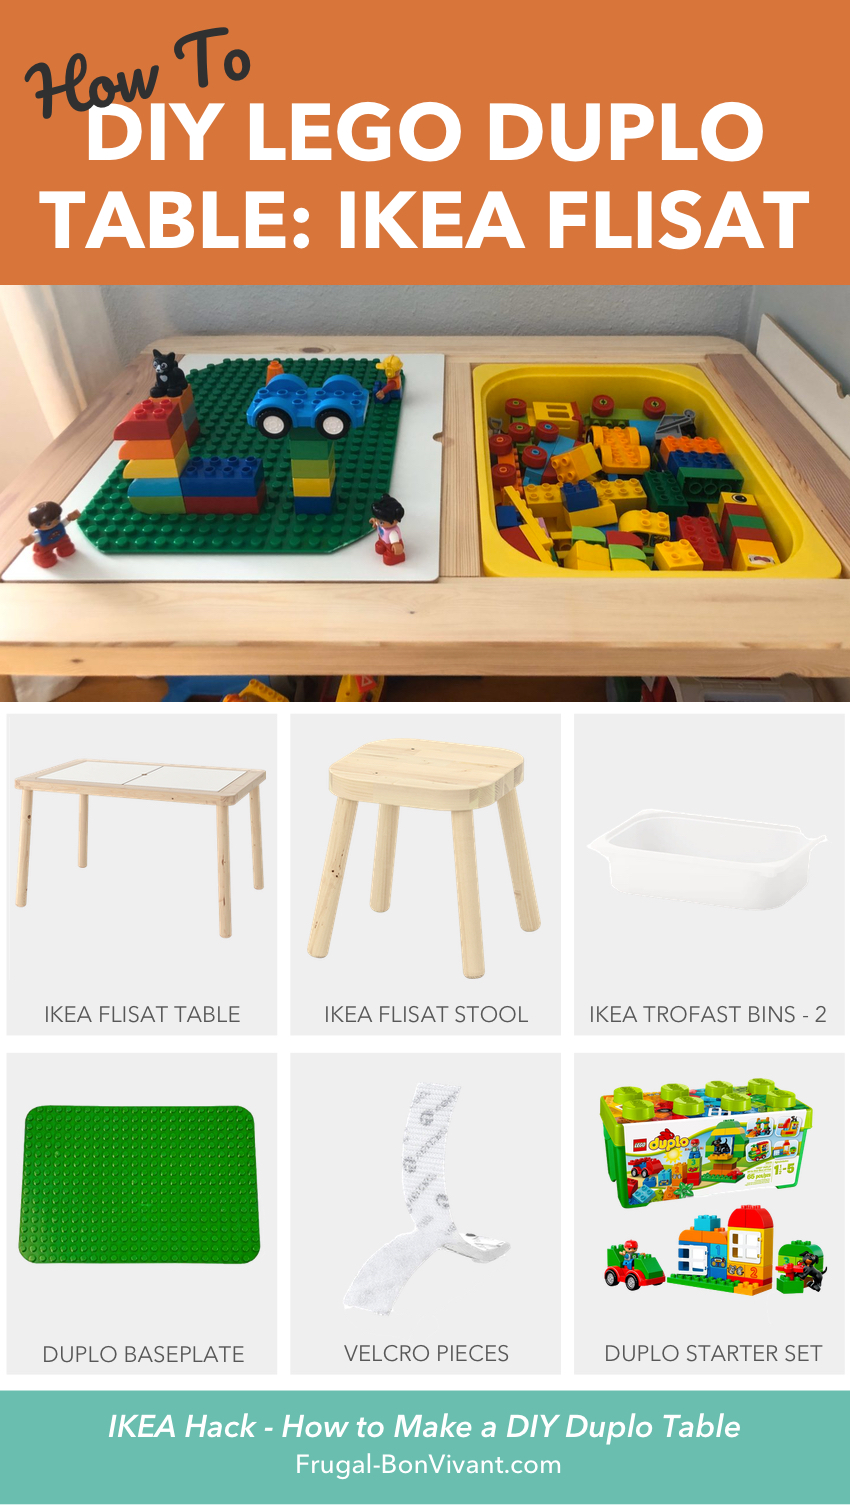 DIY Lego Table - Girl, You Can Do This!